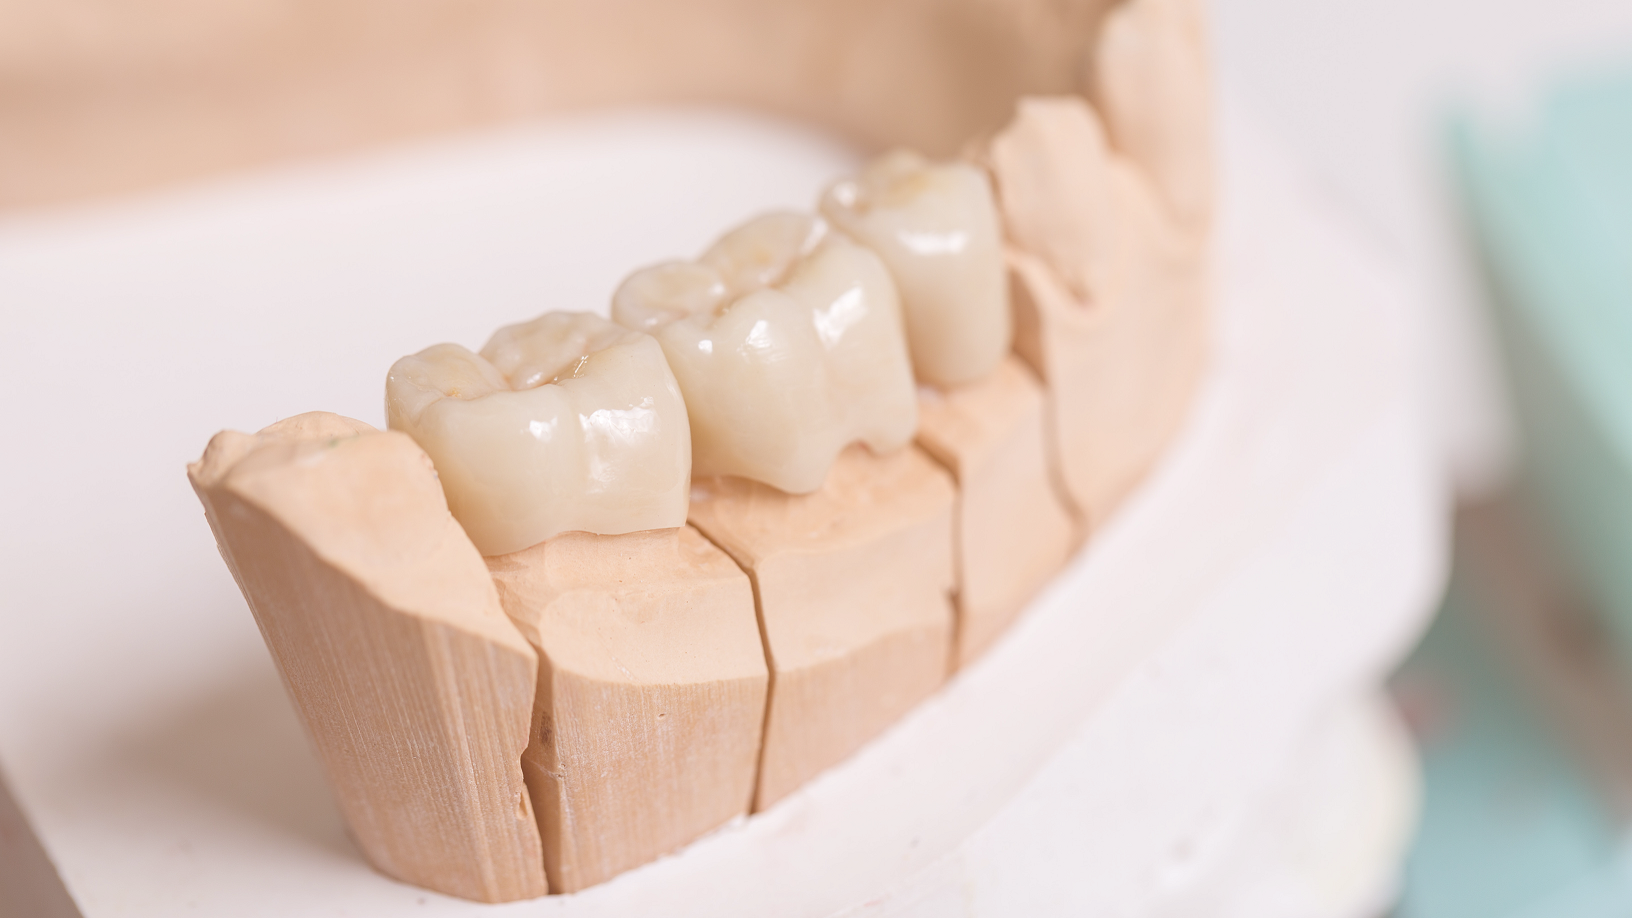 Fixed Dental Bridge - The Best Alternative to Dental Implants